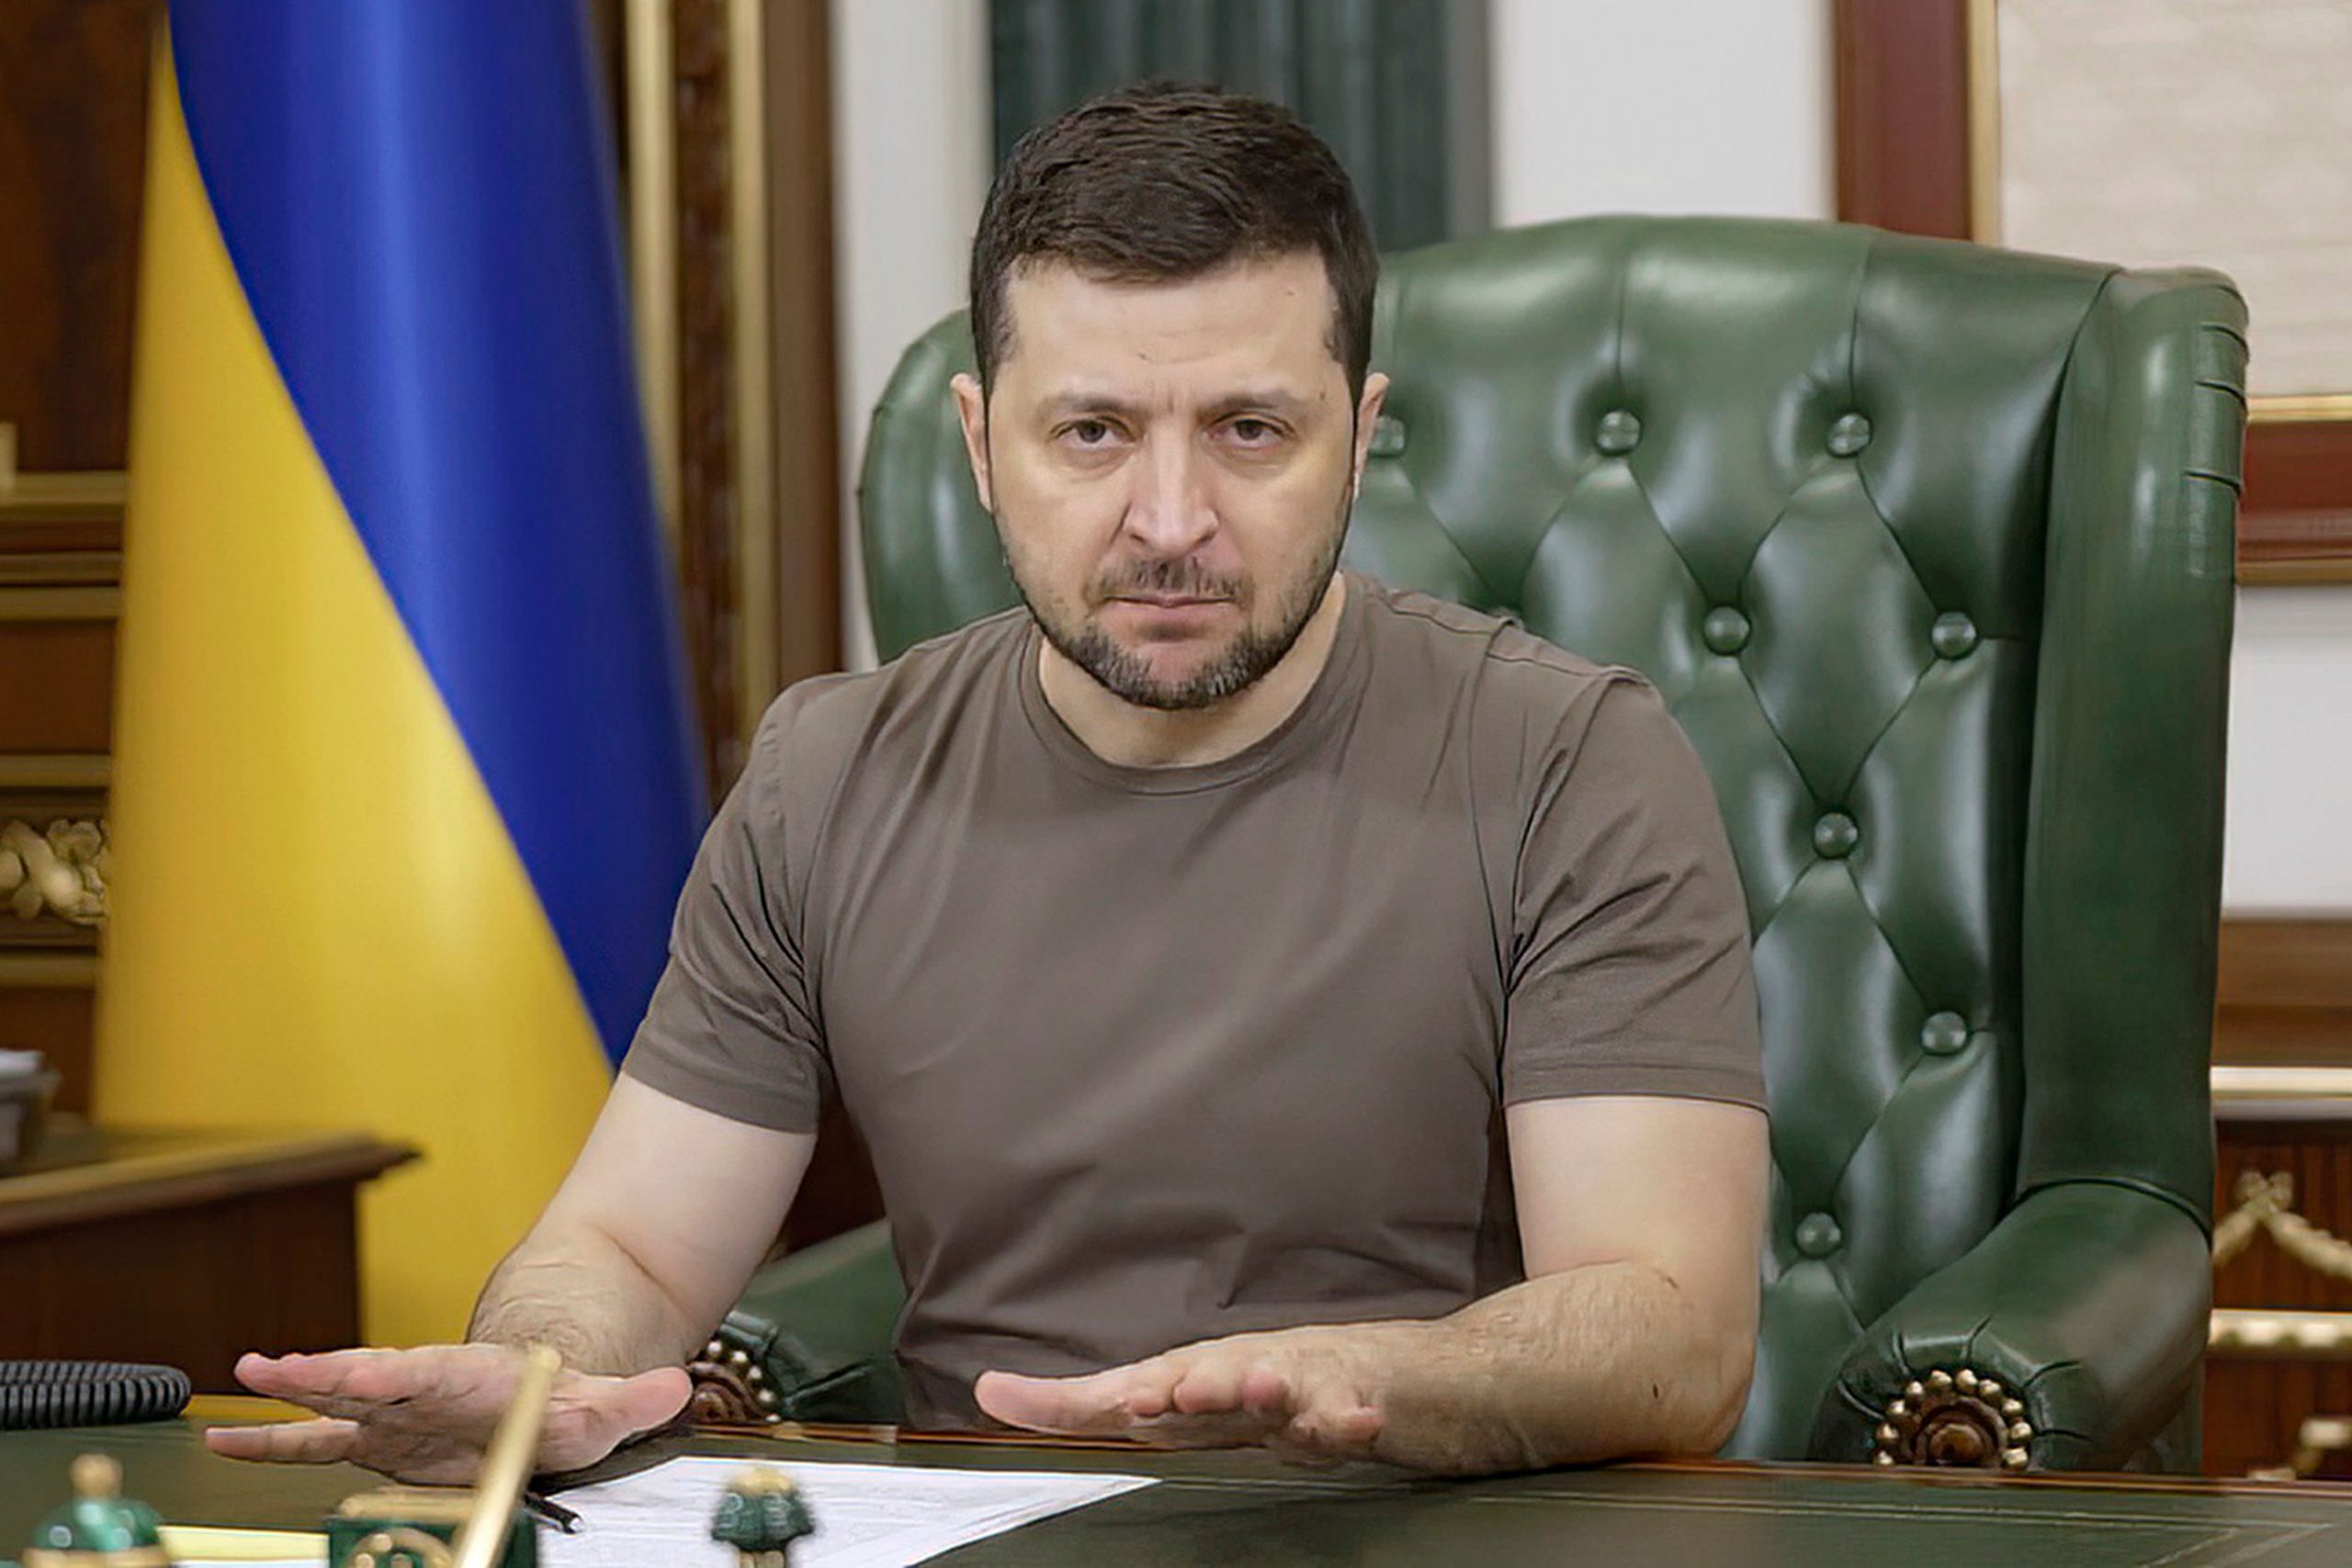 A ‘sanction cocktail’ like Molotov necessary to halt Russia: Ukraine President Volodymyr Zelensky